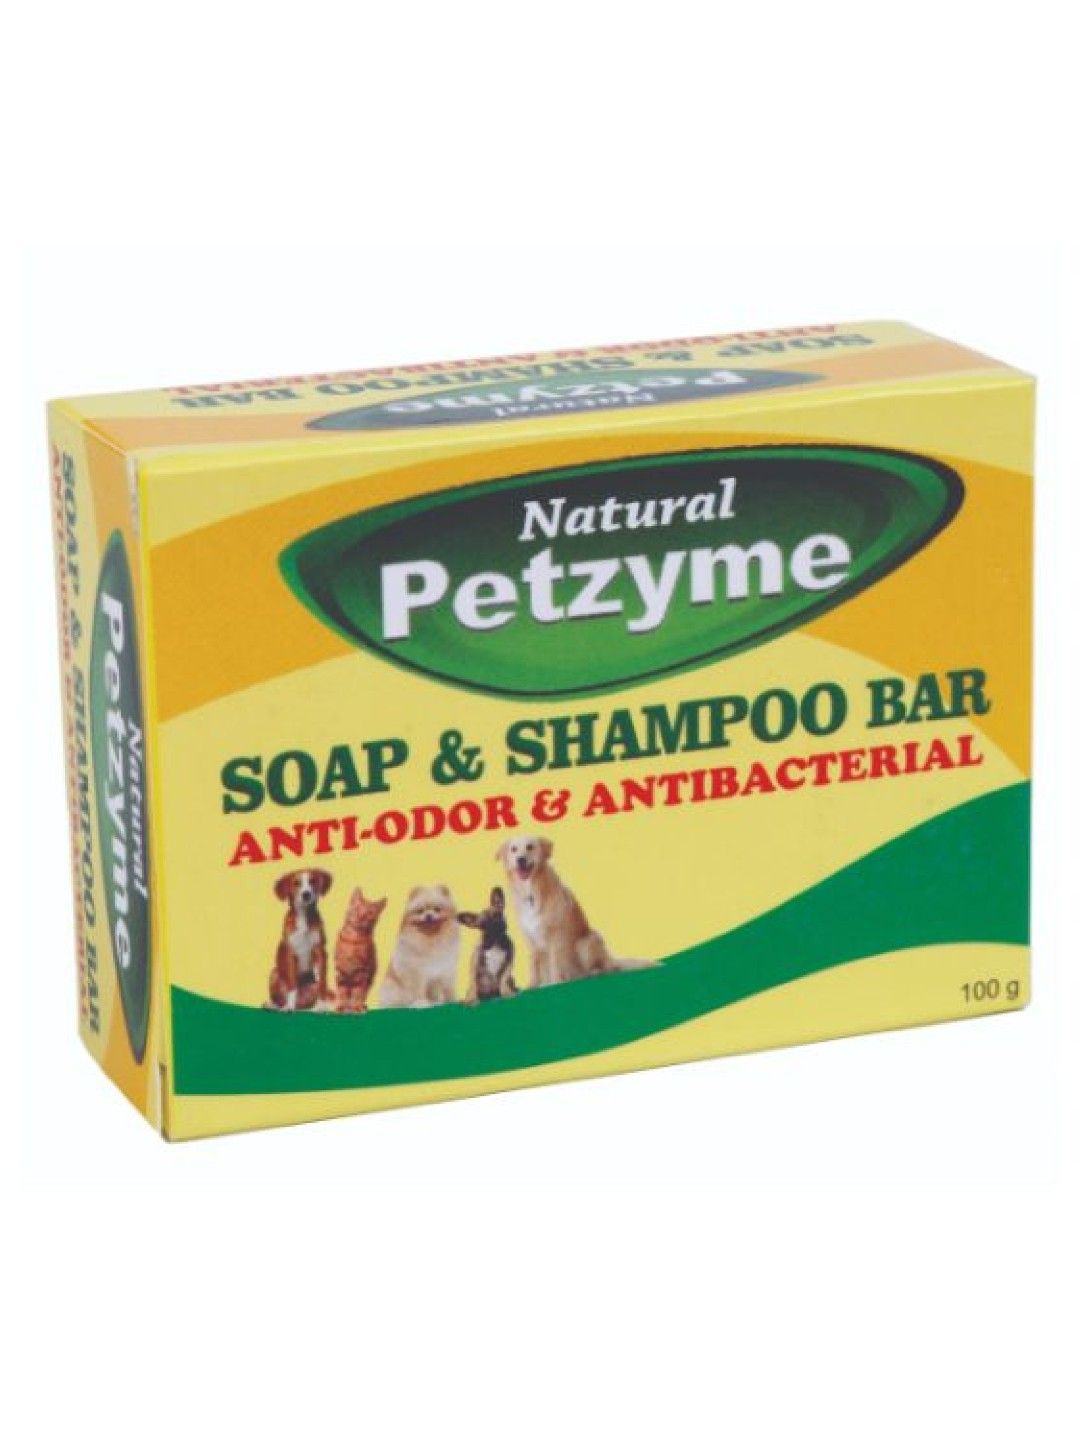 Petzyme Soap and Shampoo Bar Anti-odor & Antibacterial (100g)